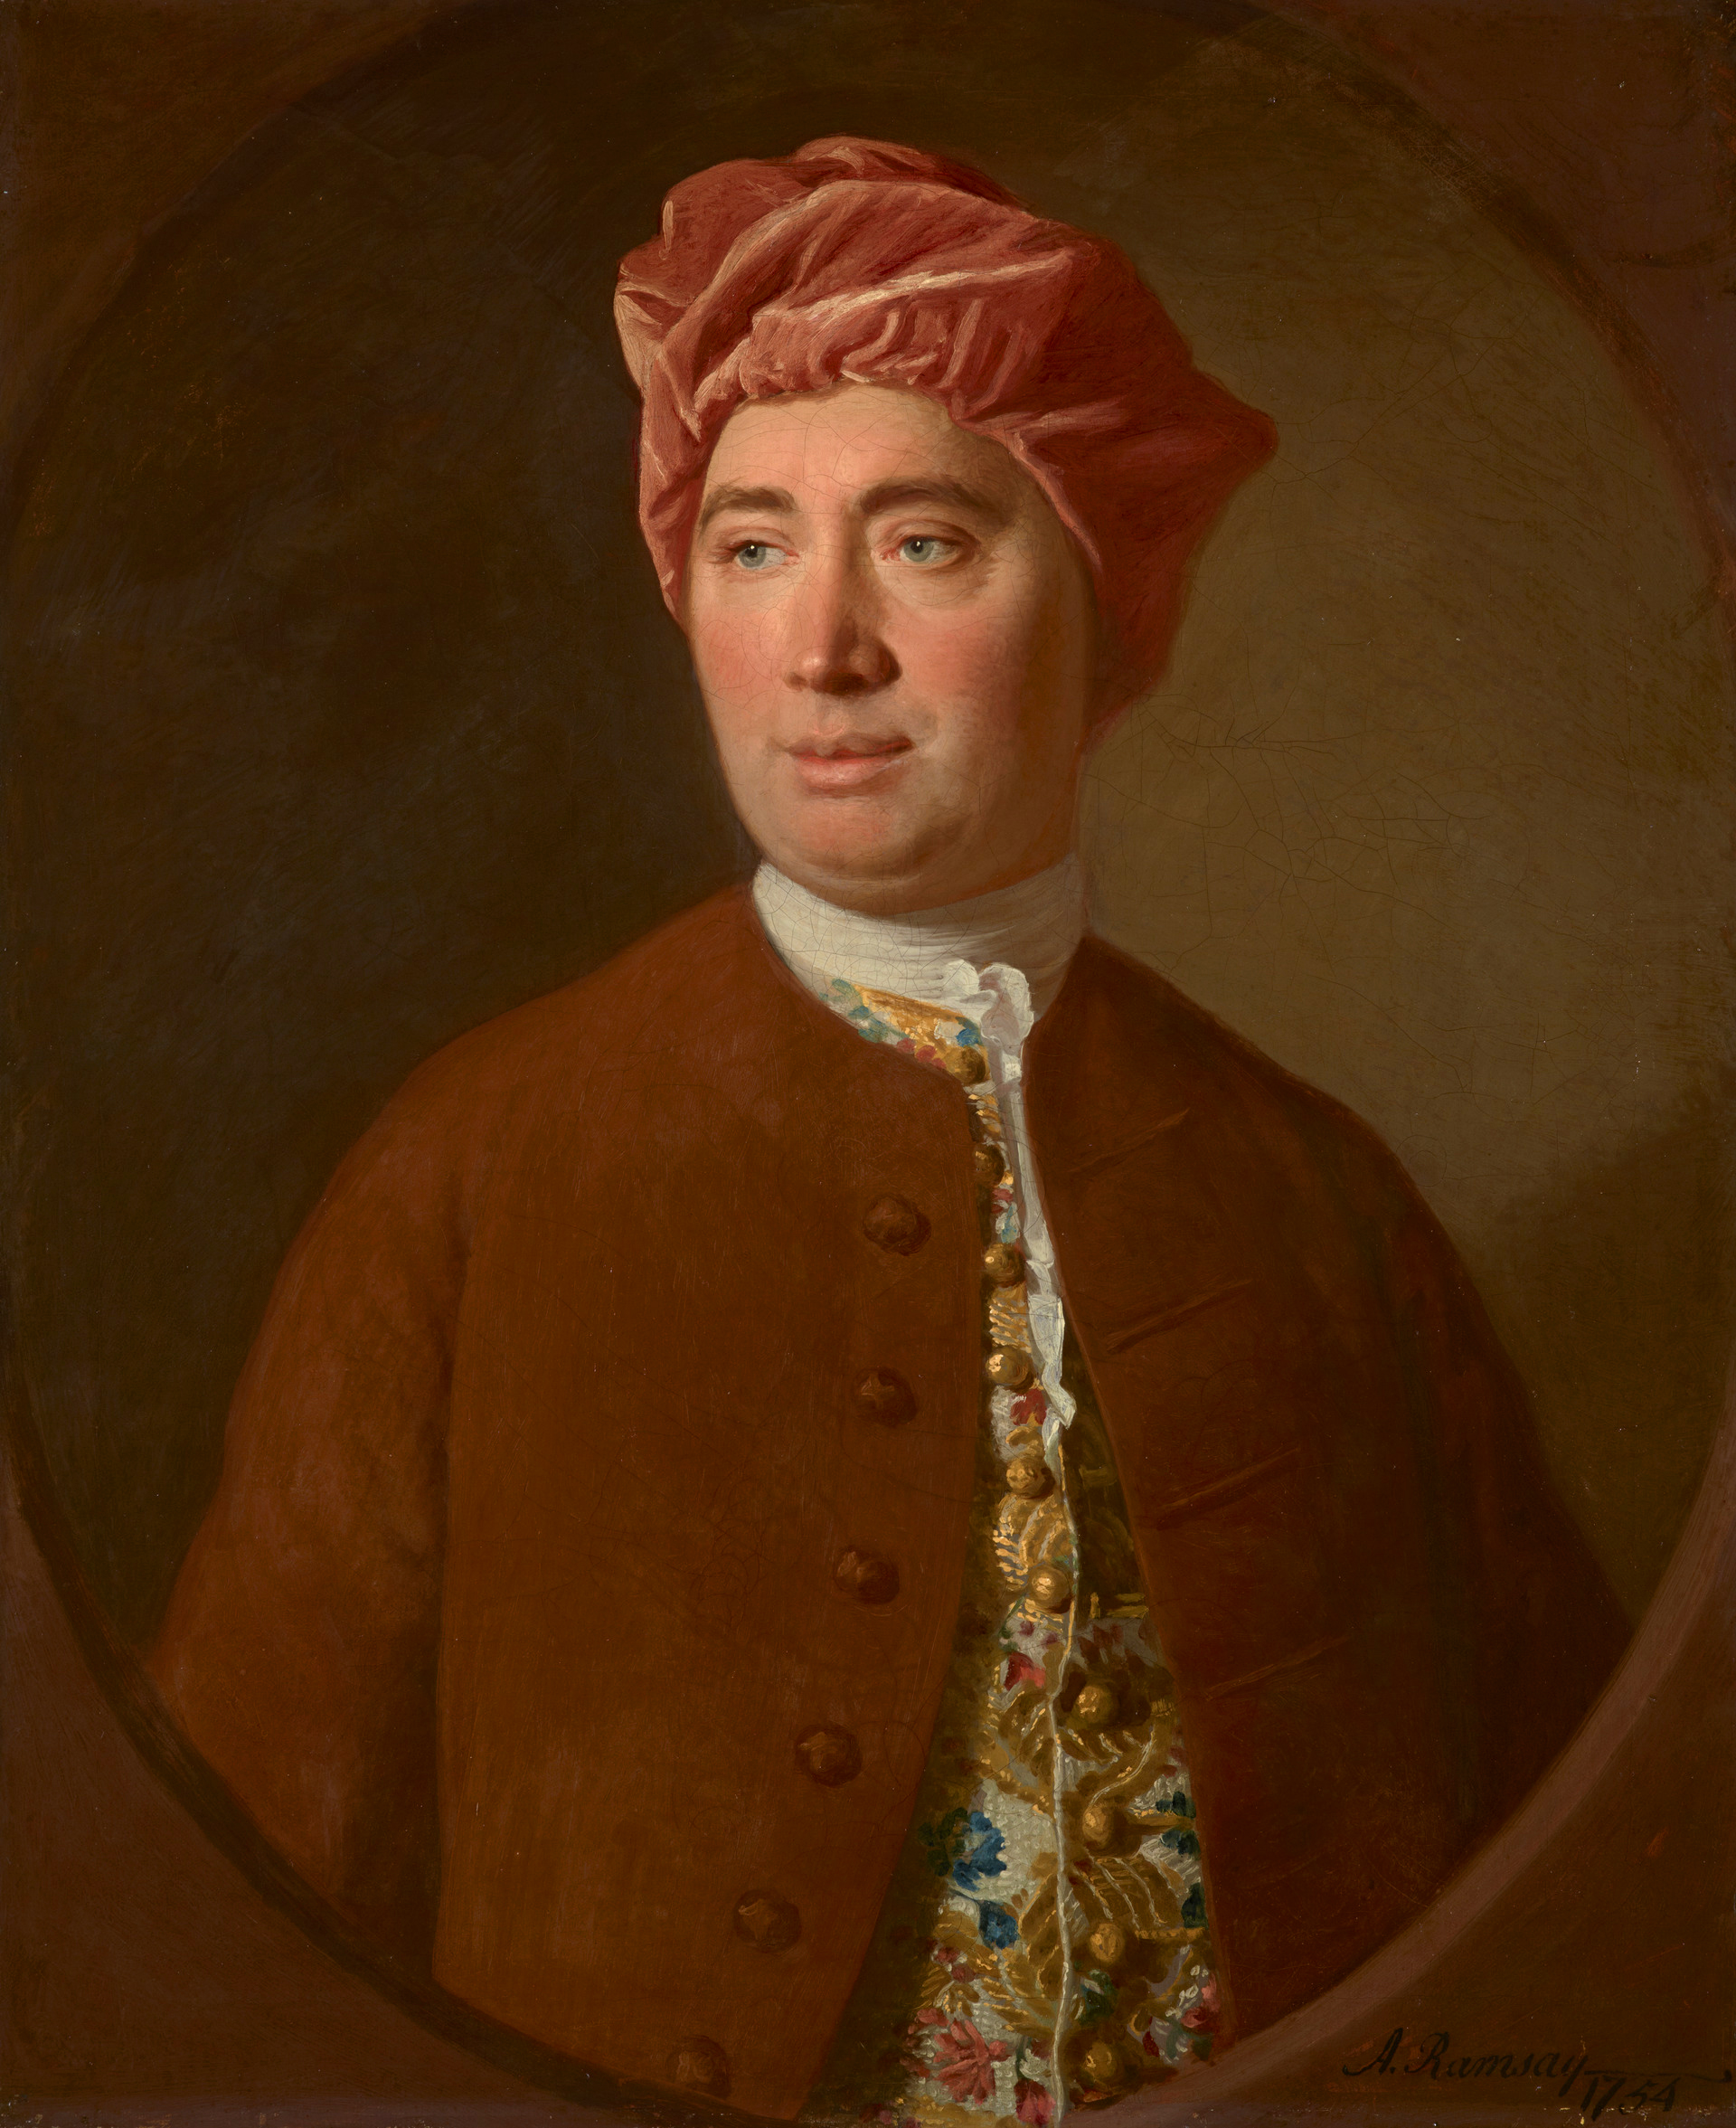   David Hume by Allan Ramsay, 1754 (Wikimedia Commons)